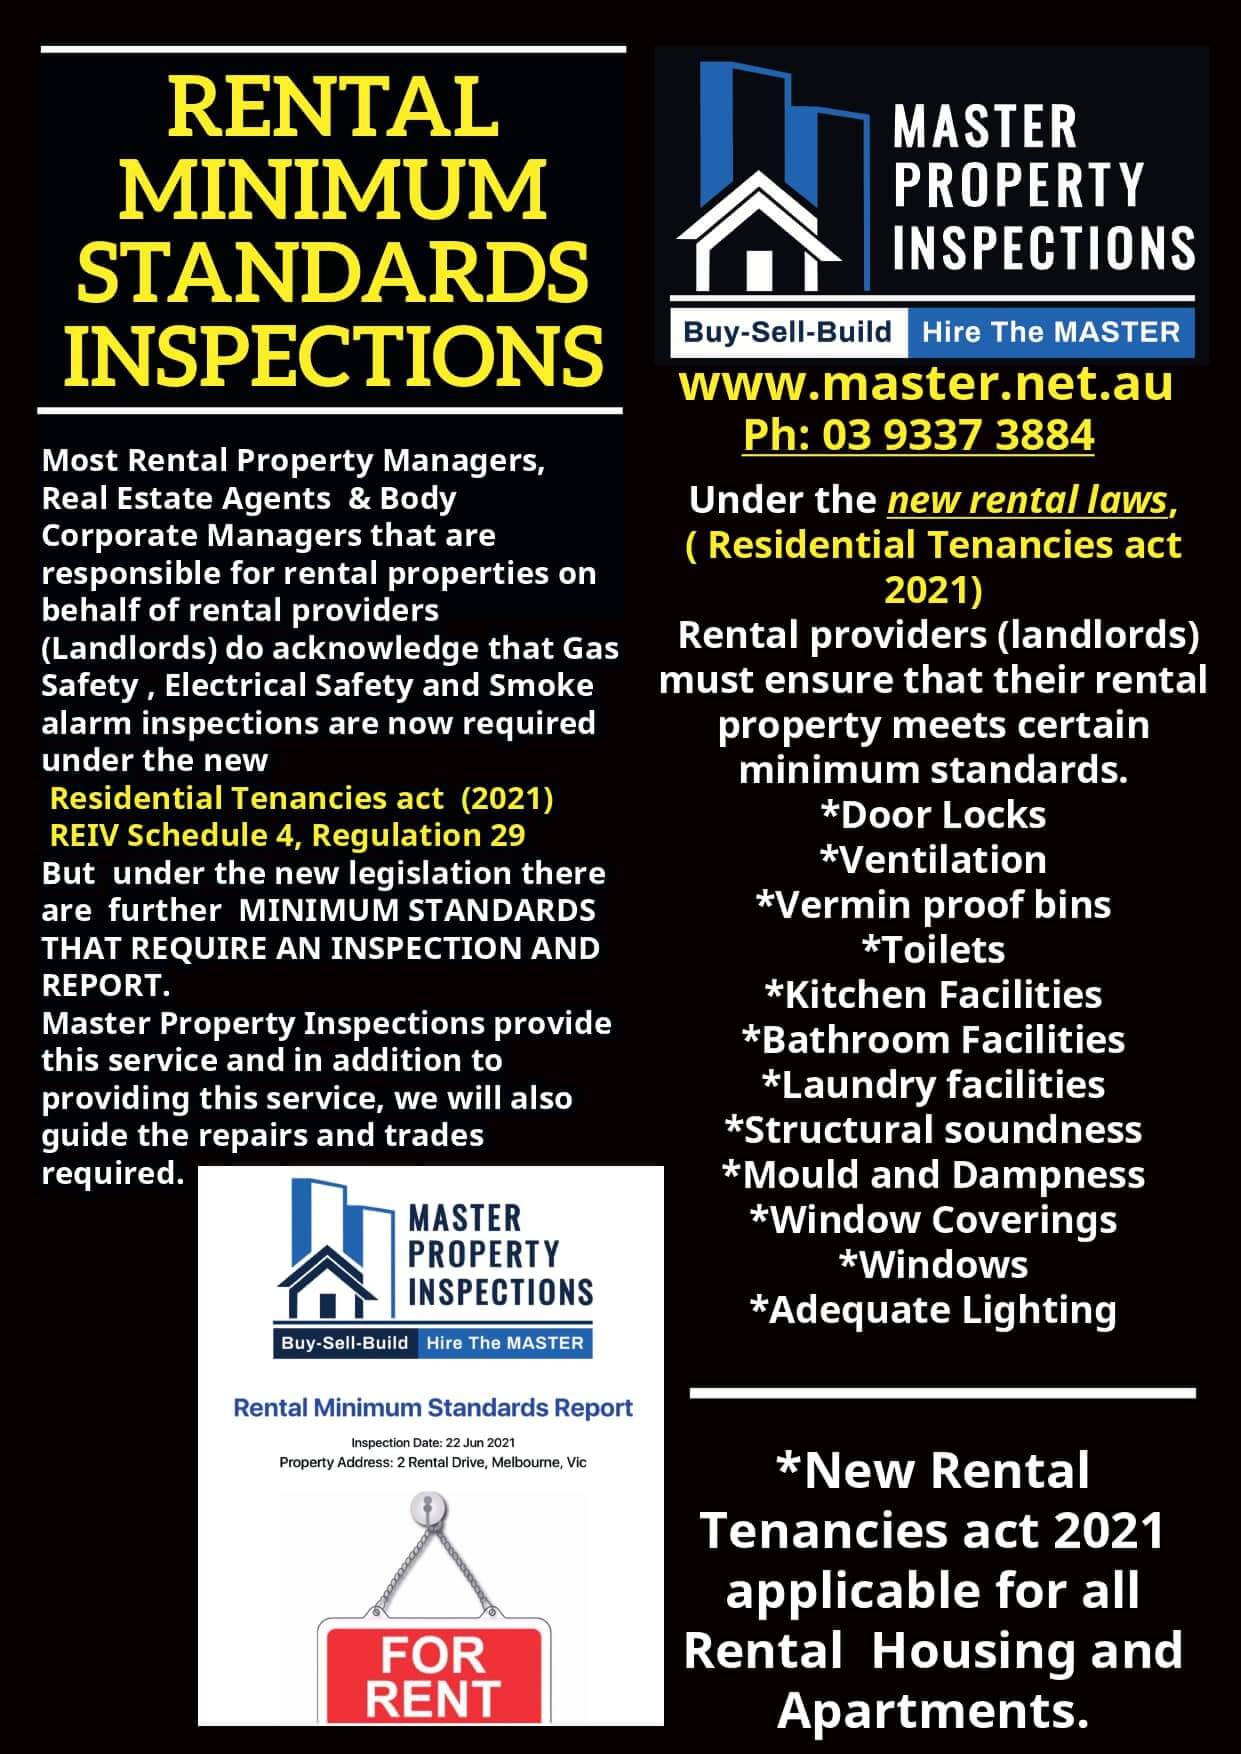 rental-minimum-standards-inspections.jpg